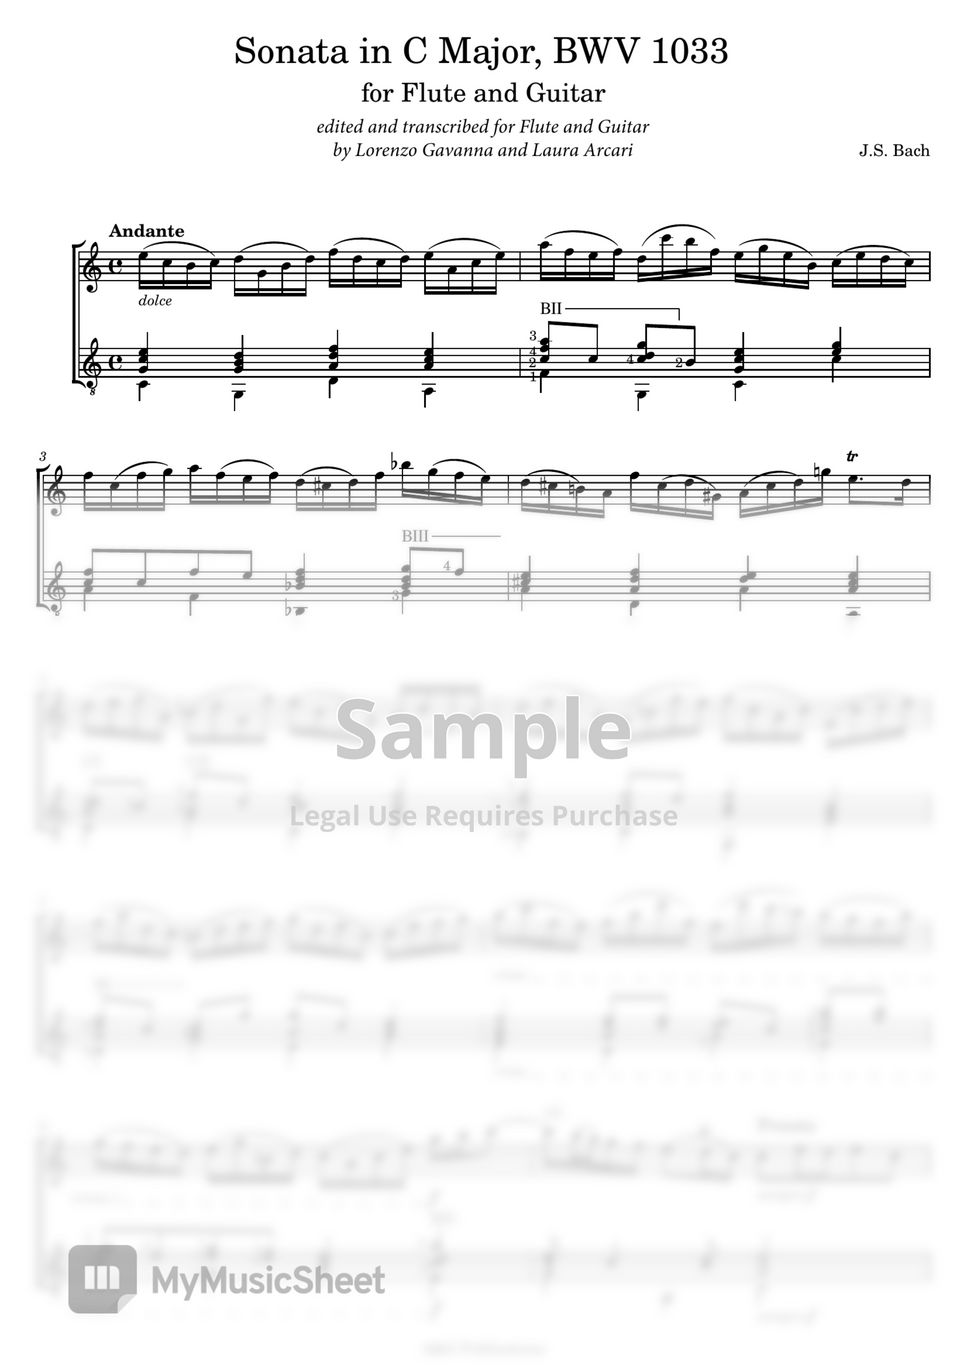 Johann Sebastian Bach - Flute Sonata in C Major, BWV 1033 by Lorenzo Gavanna (Flute), Laura Arcari (Guitar)